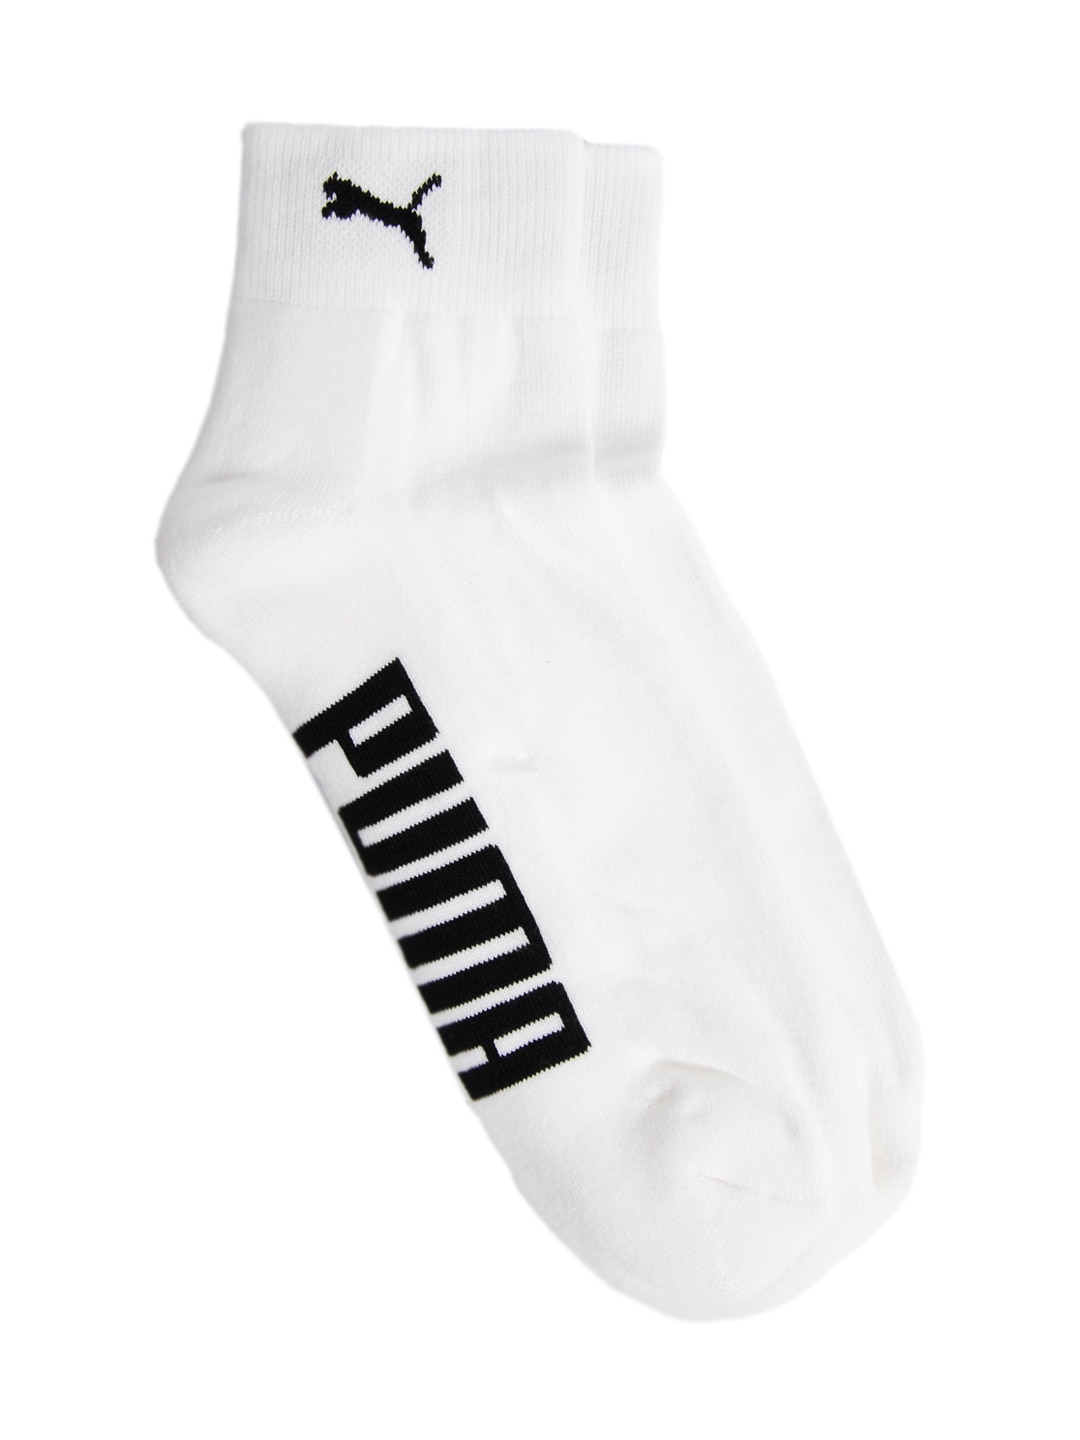 Puma Men Foundation Quarters White Socks